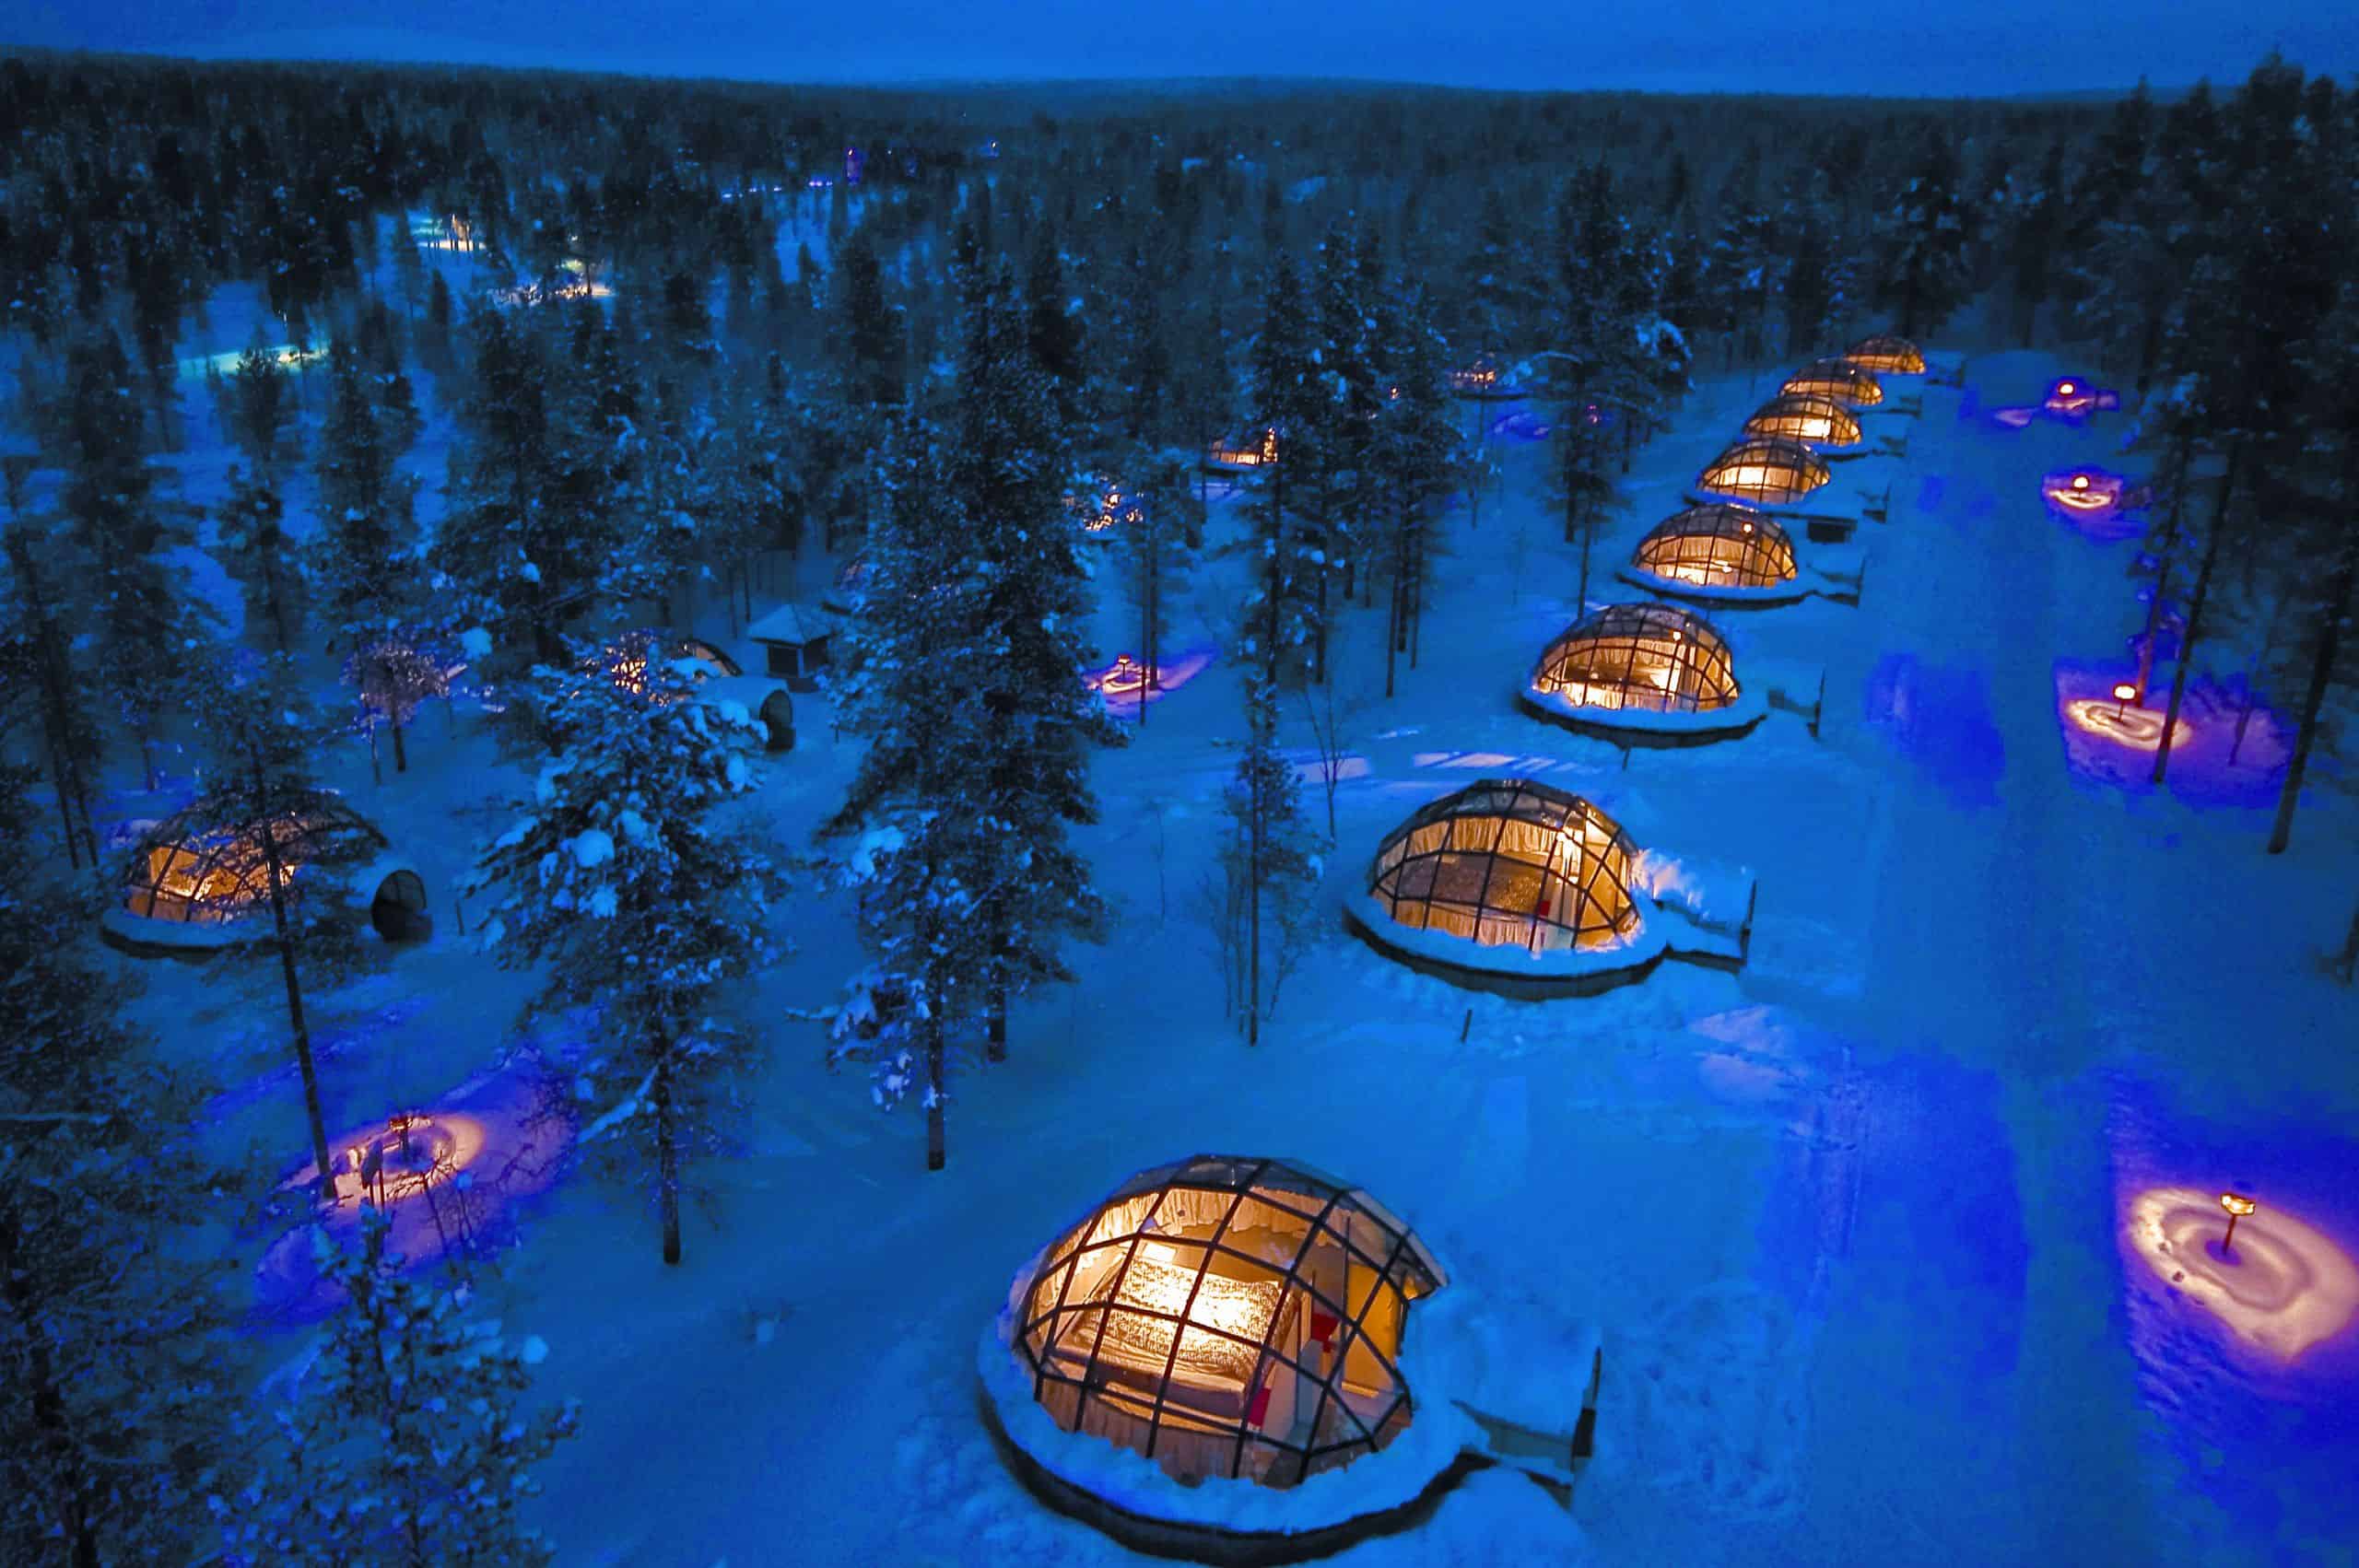 Kakslauttanen Arctic Resort – Lapland Igloo Hotel